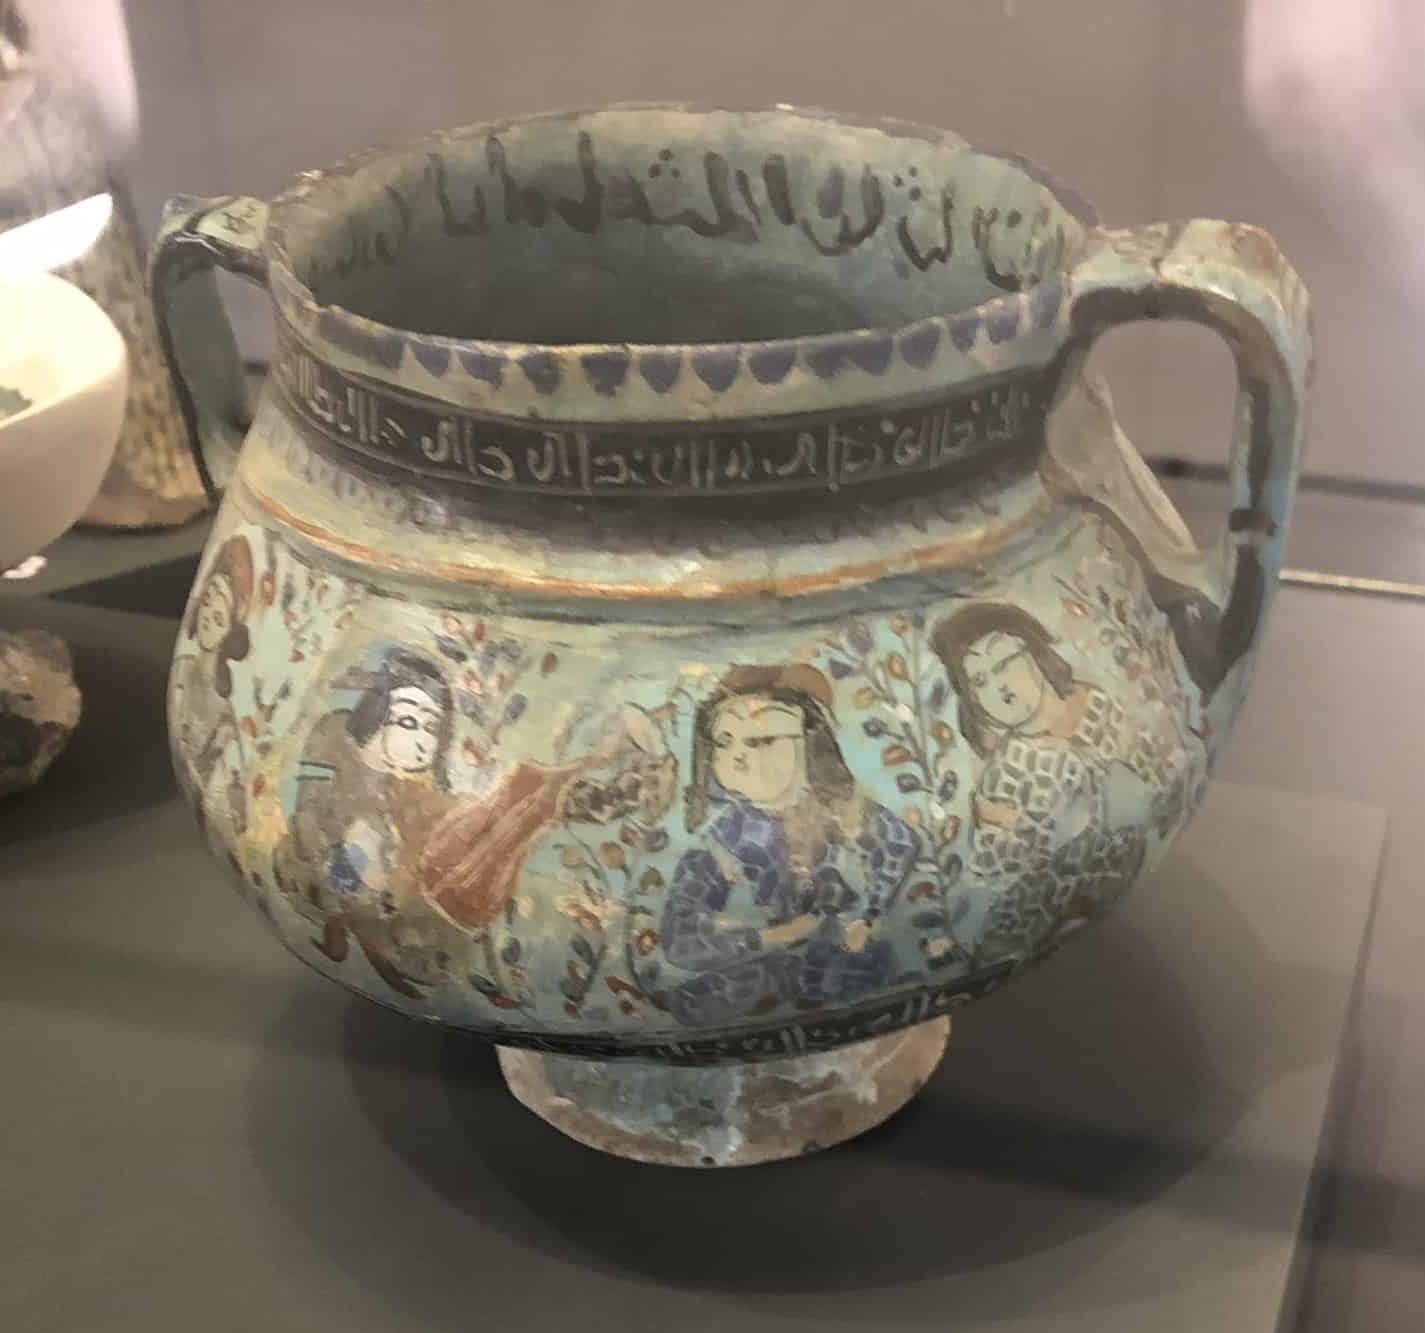 Double handled vase, minai technique, Seljuk period, 13th century at the Bursa Museum of Turkish and Islamic Arts in Bursa, Turkey